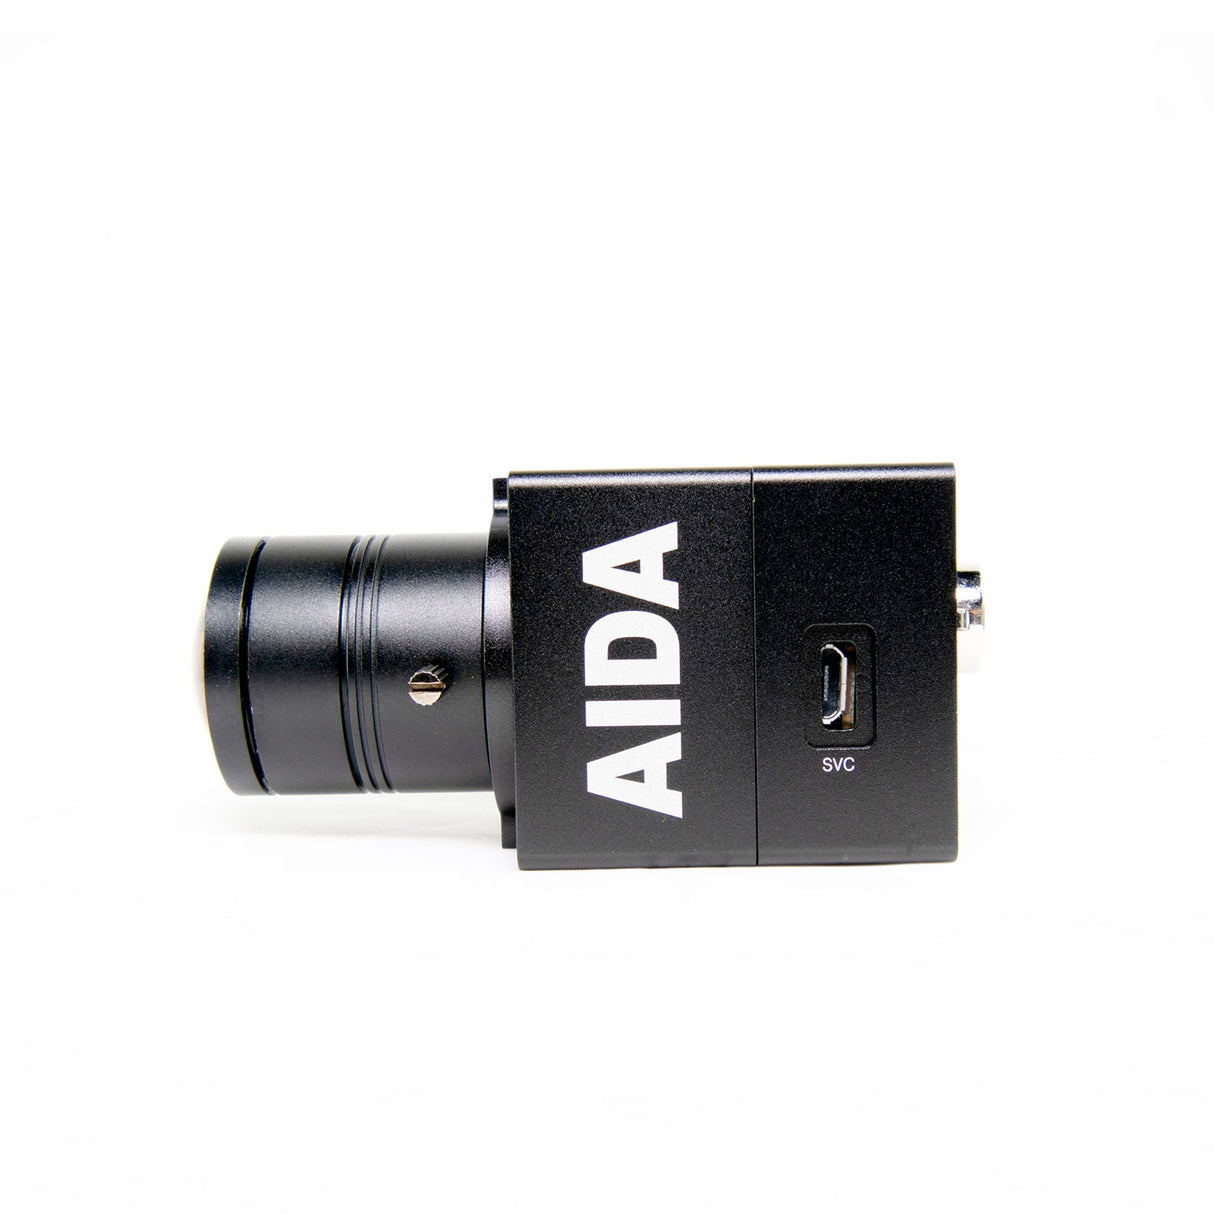 Aida UHD-100A Camera compact 4K HDMI 4:2:2